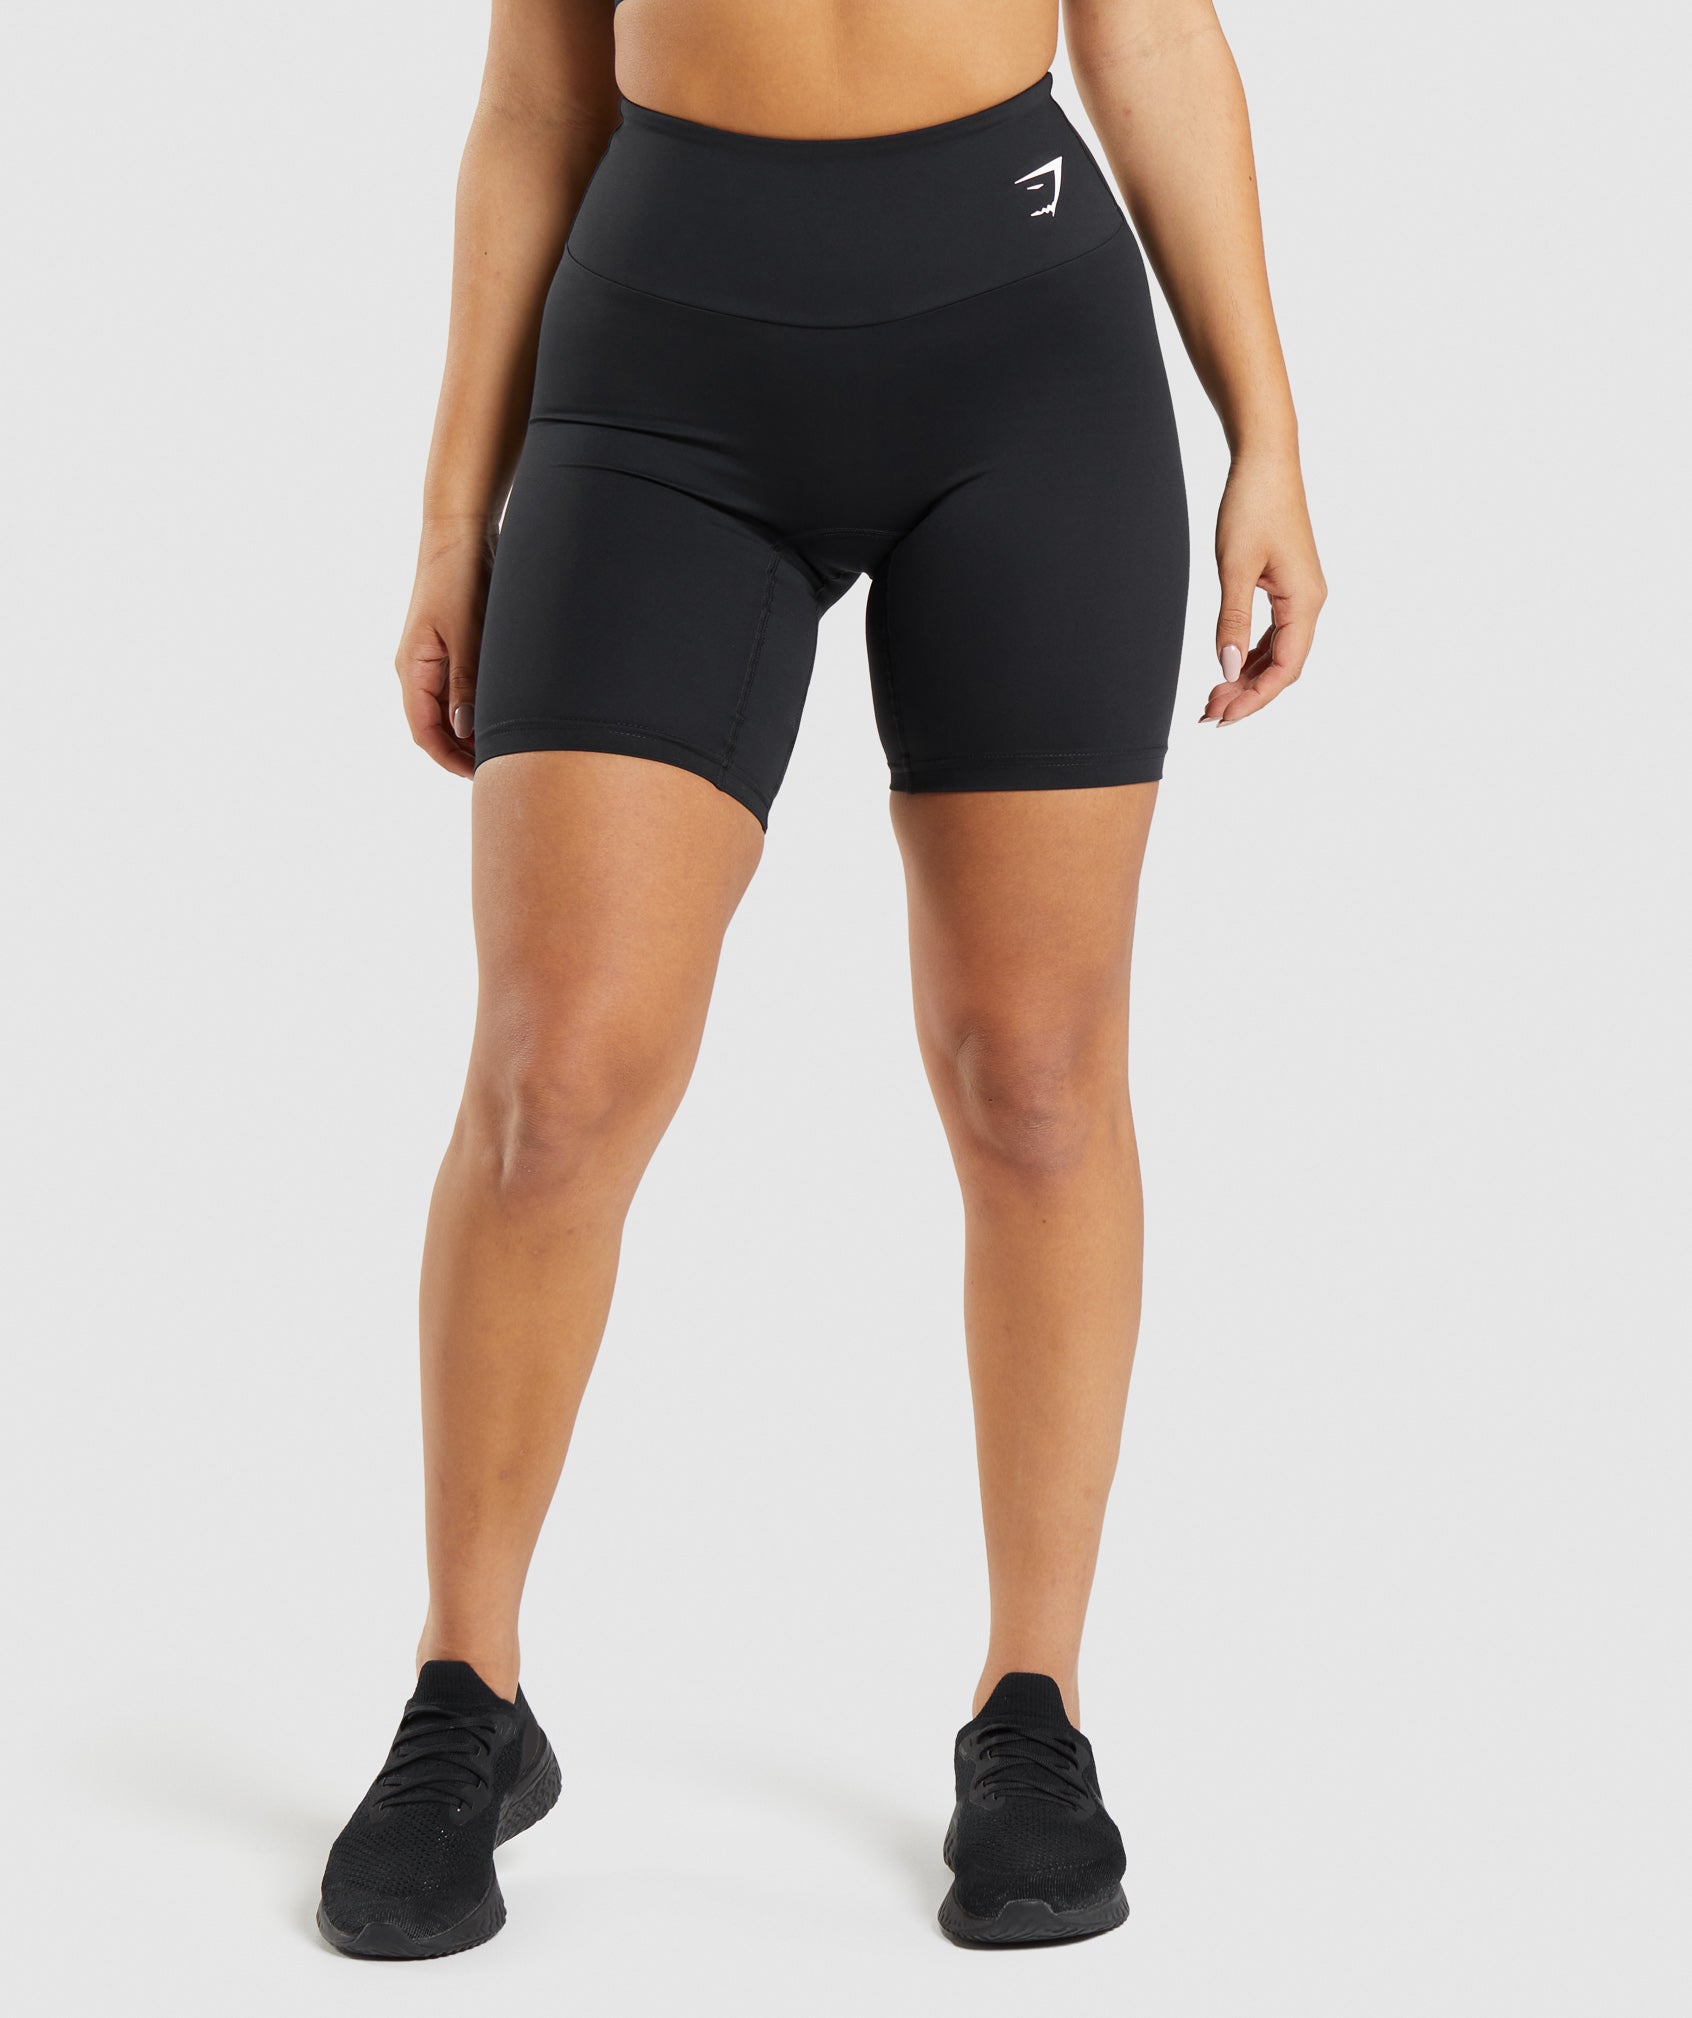 Gym Shorts & Bike Shorts for Women